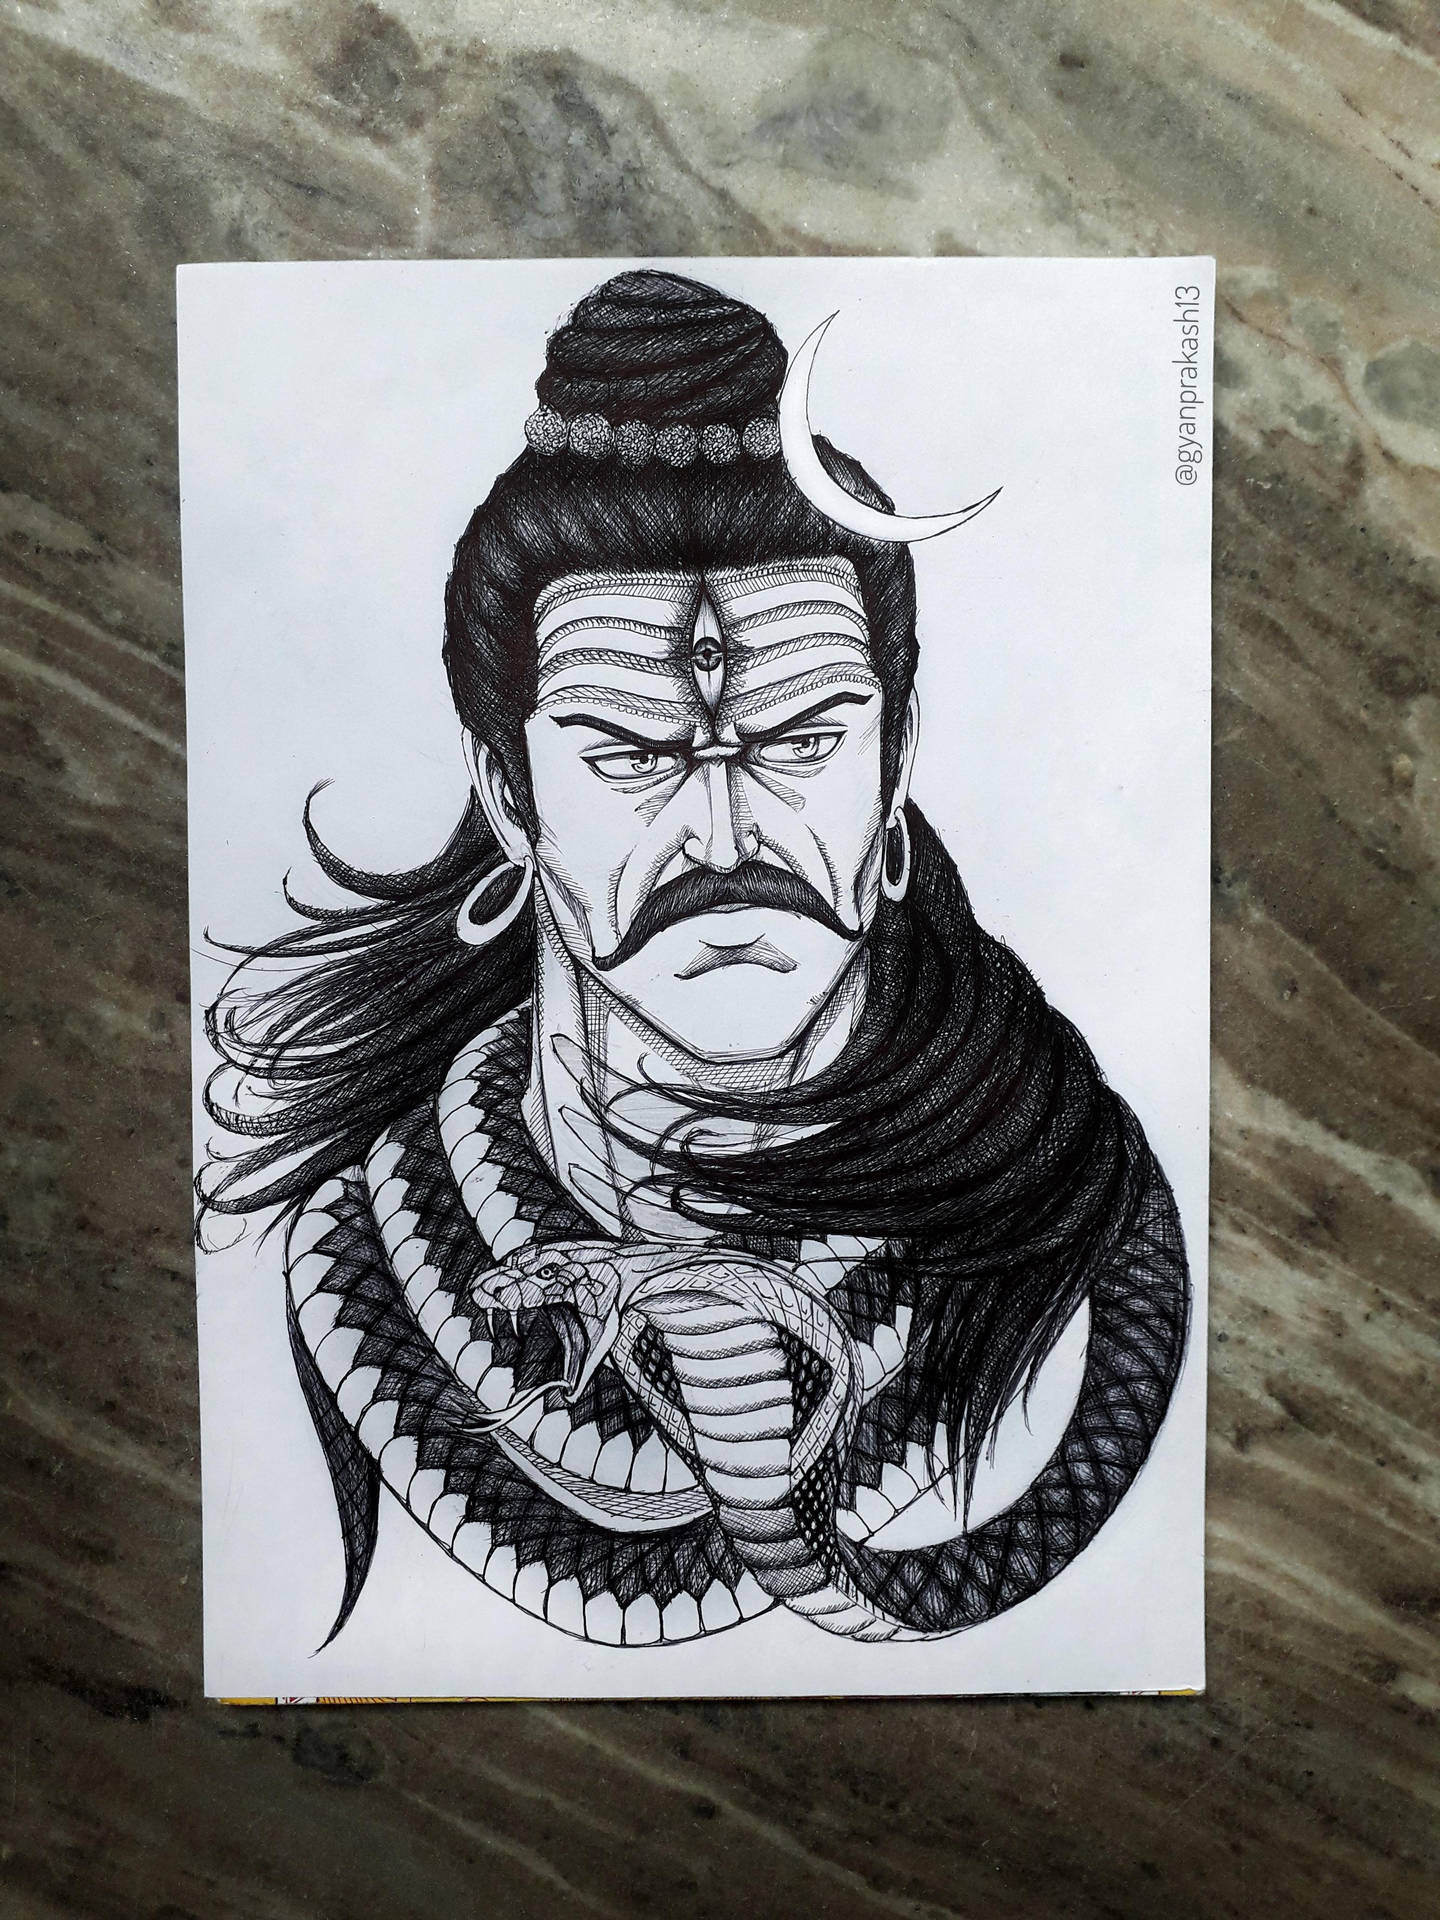 Lord Shiva drawing - Page 2 - Samsung Members-saigonsouth.com.vn